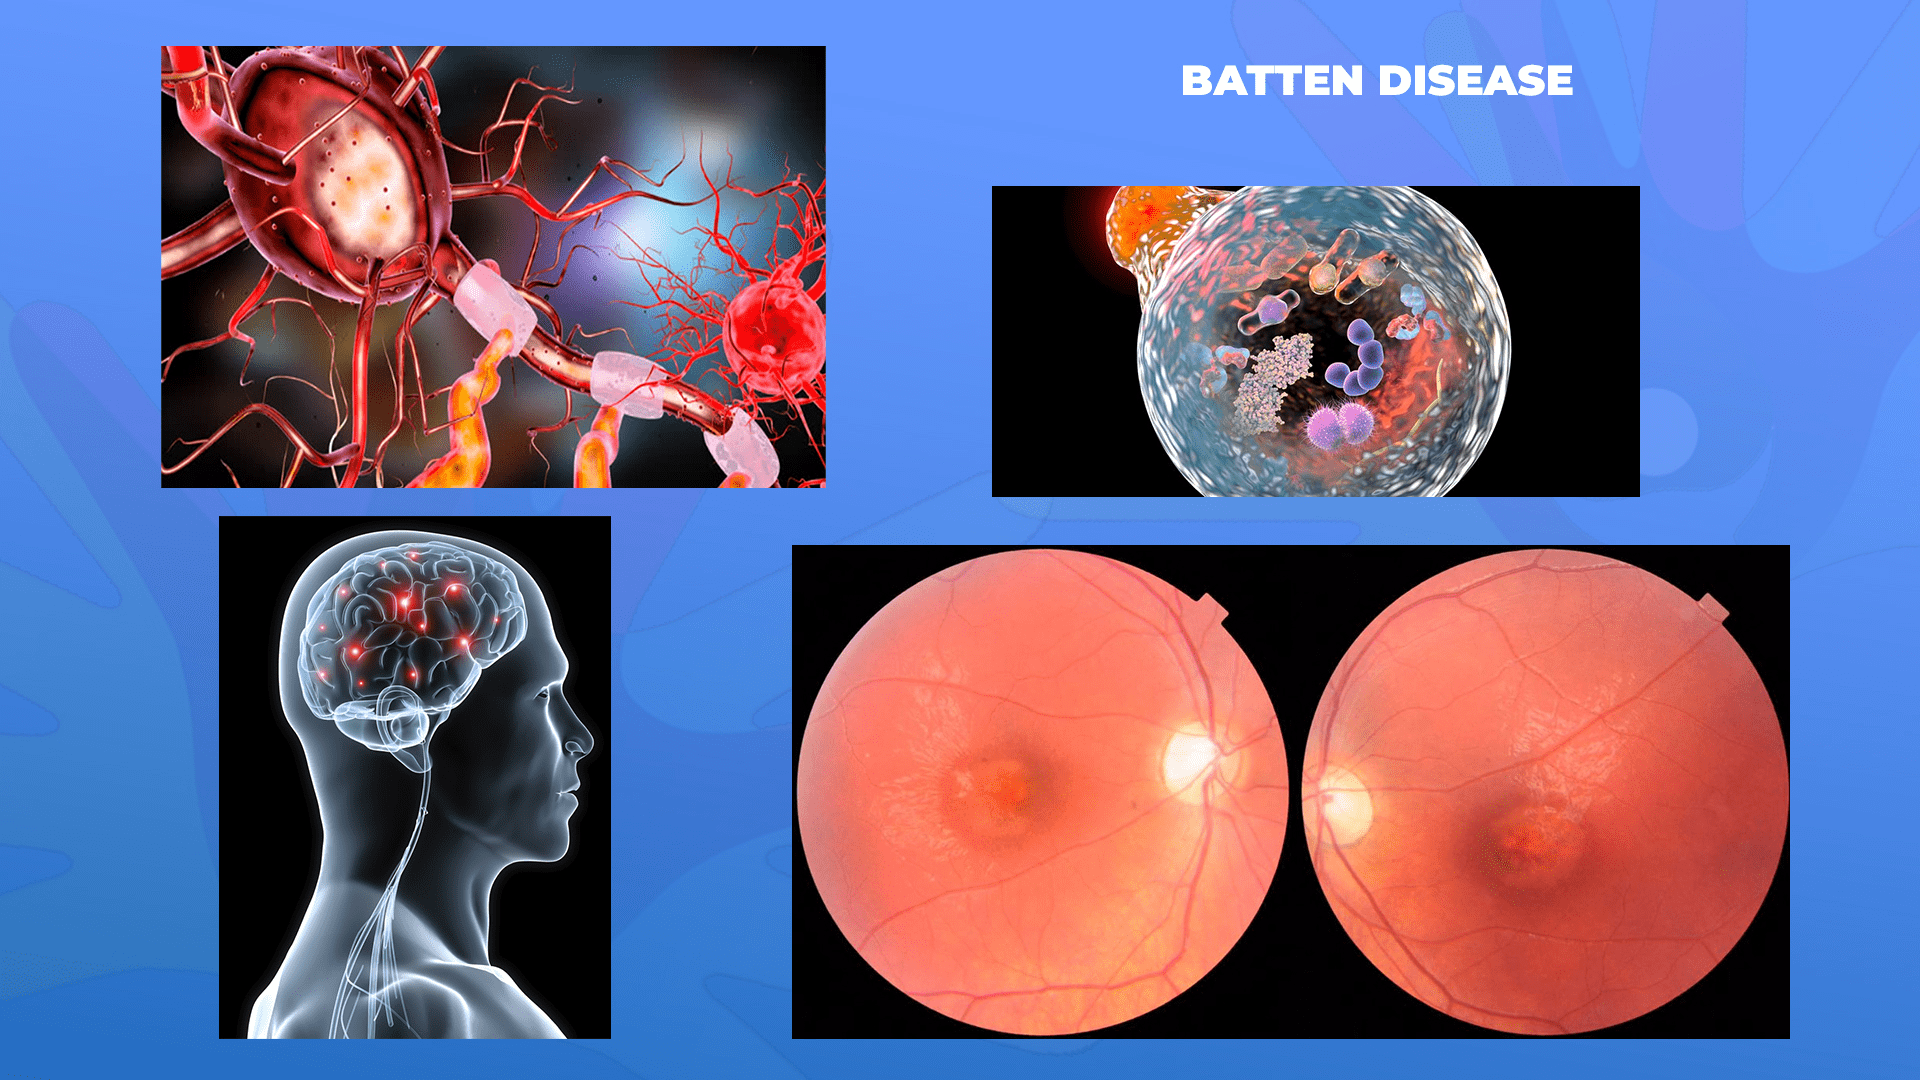 Ги запознаваме ретките болести: Батенова болест – Batten disease